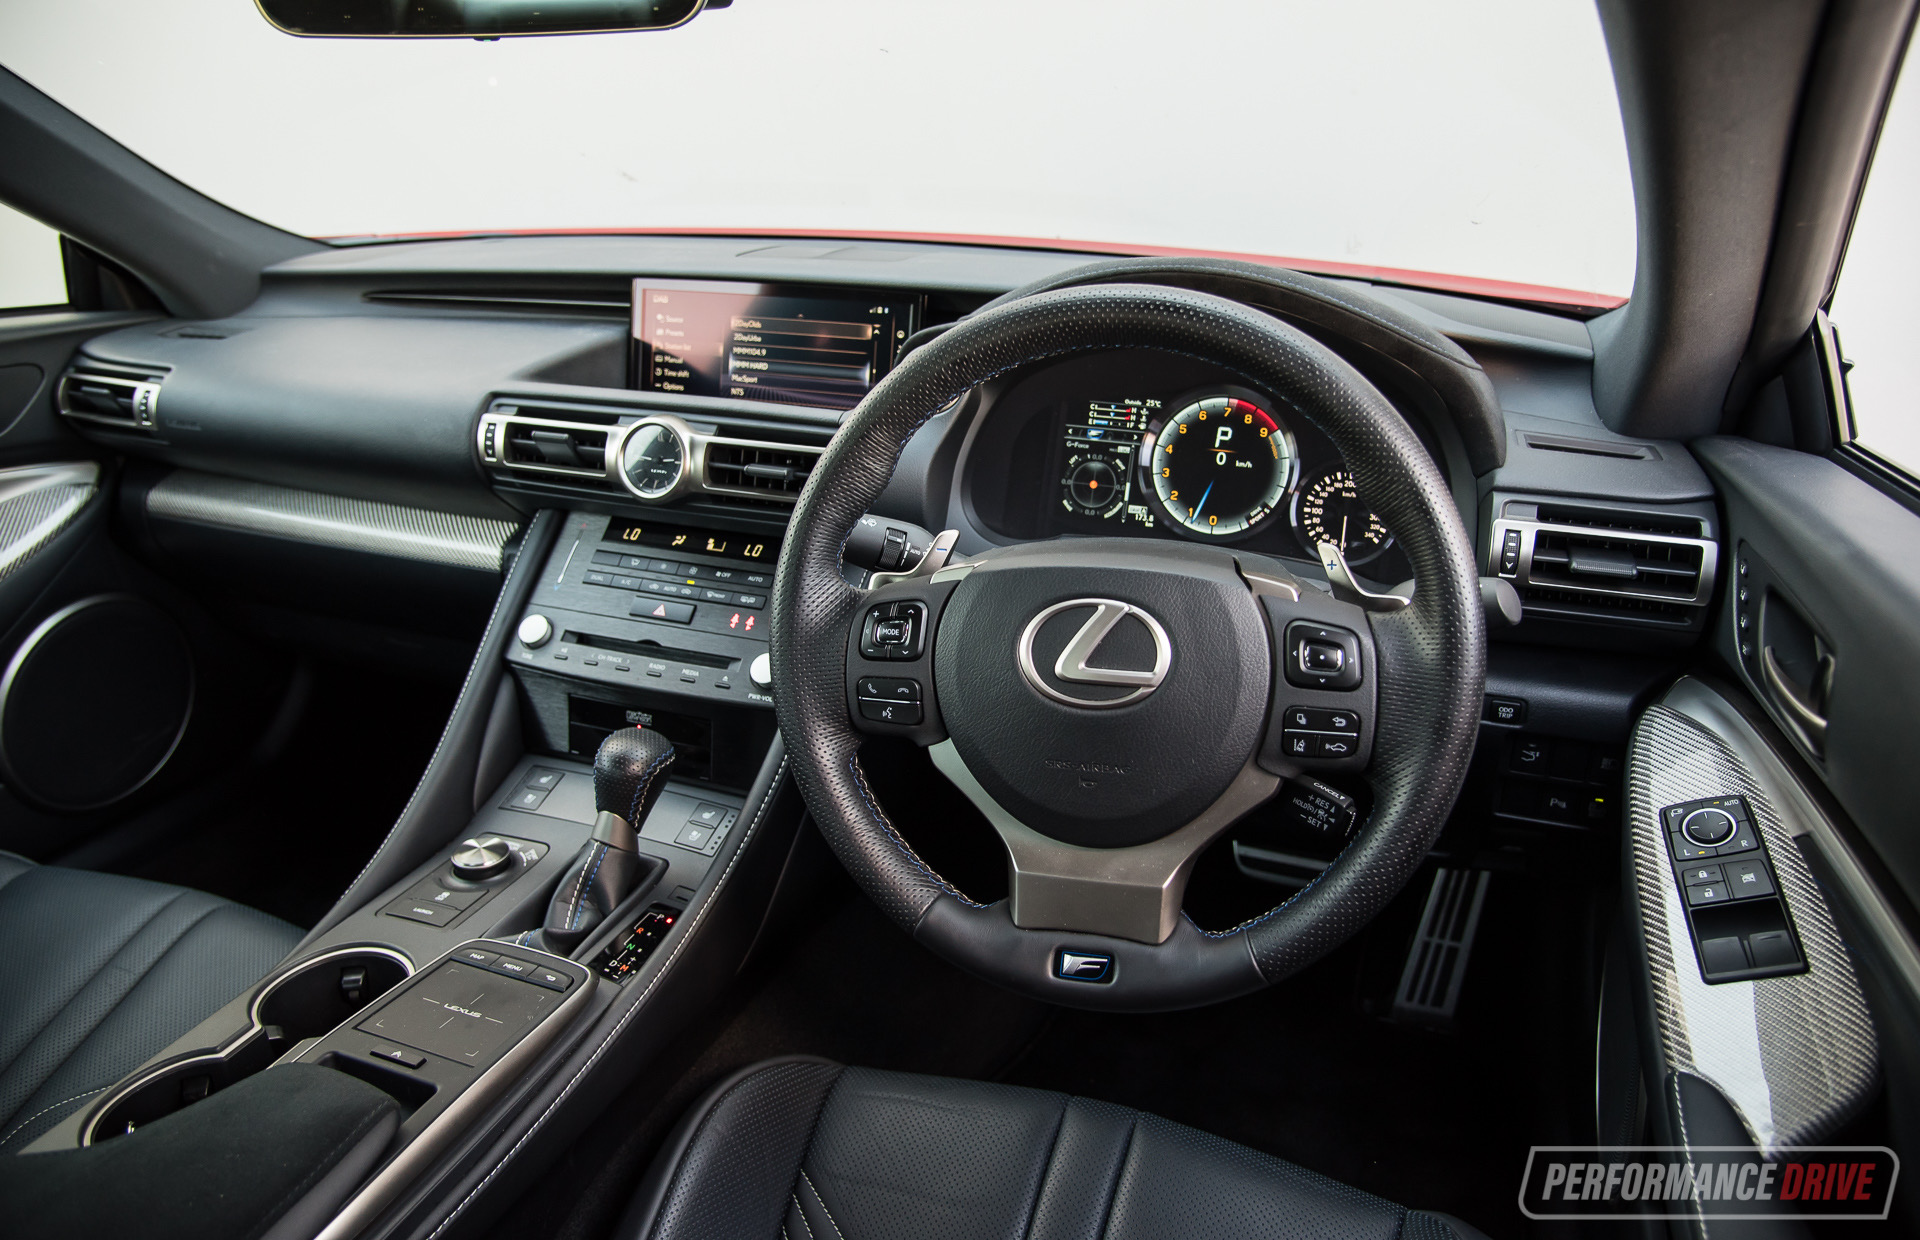 2020 Lexus Rc F Review Video Performancedrive